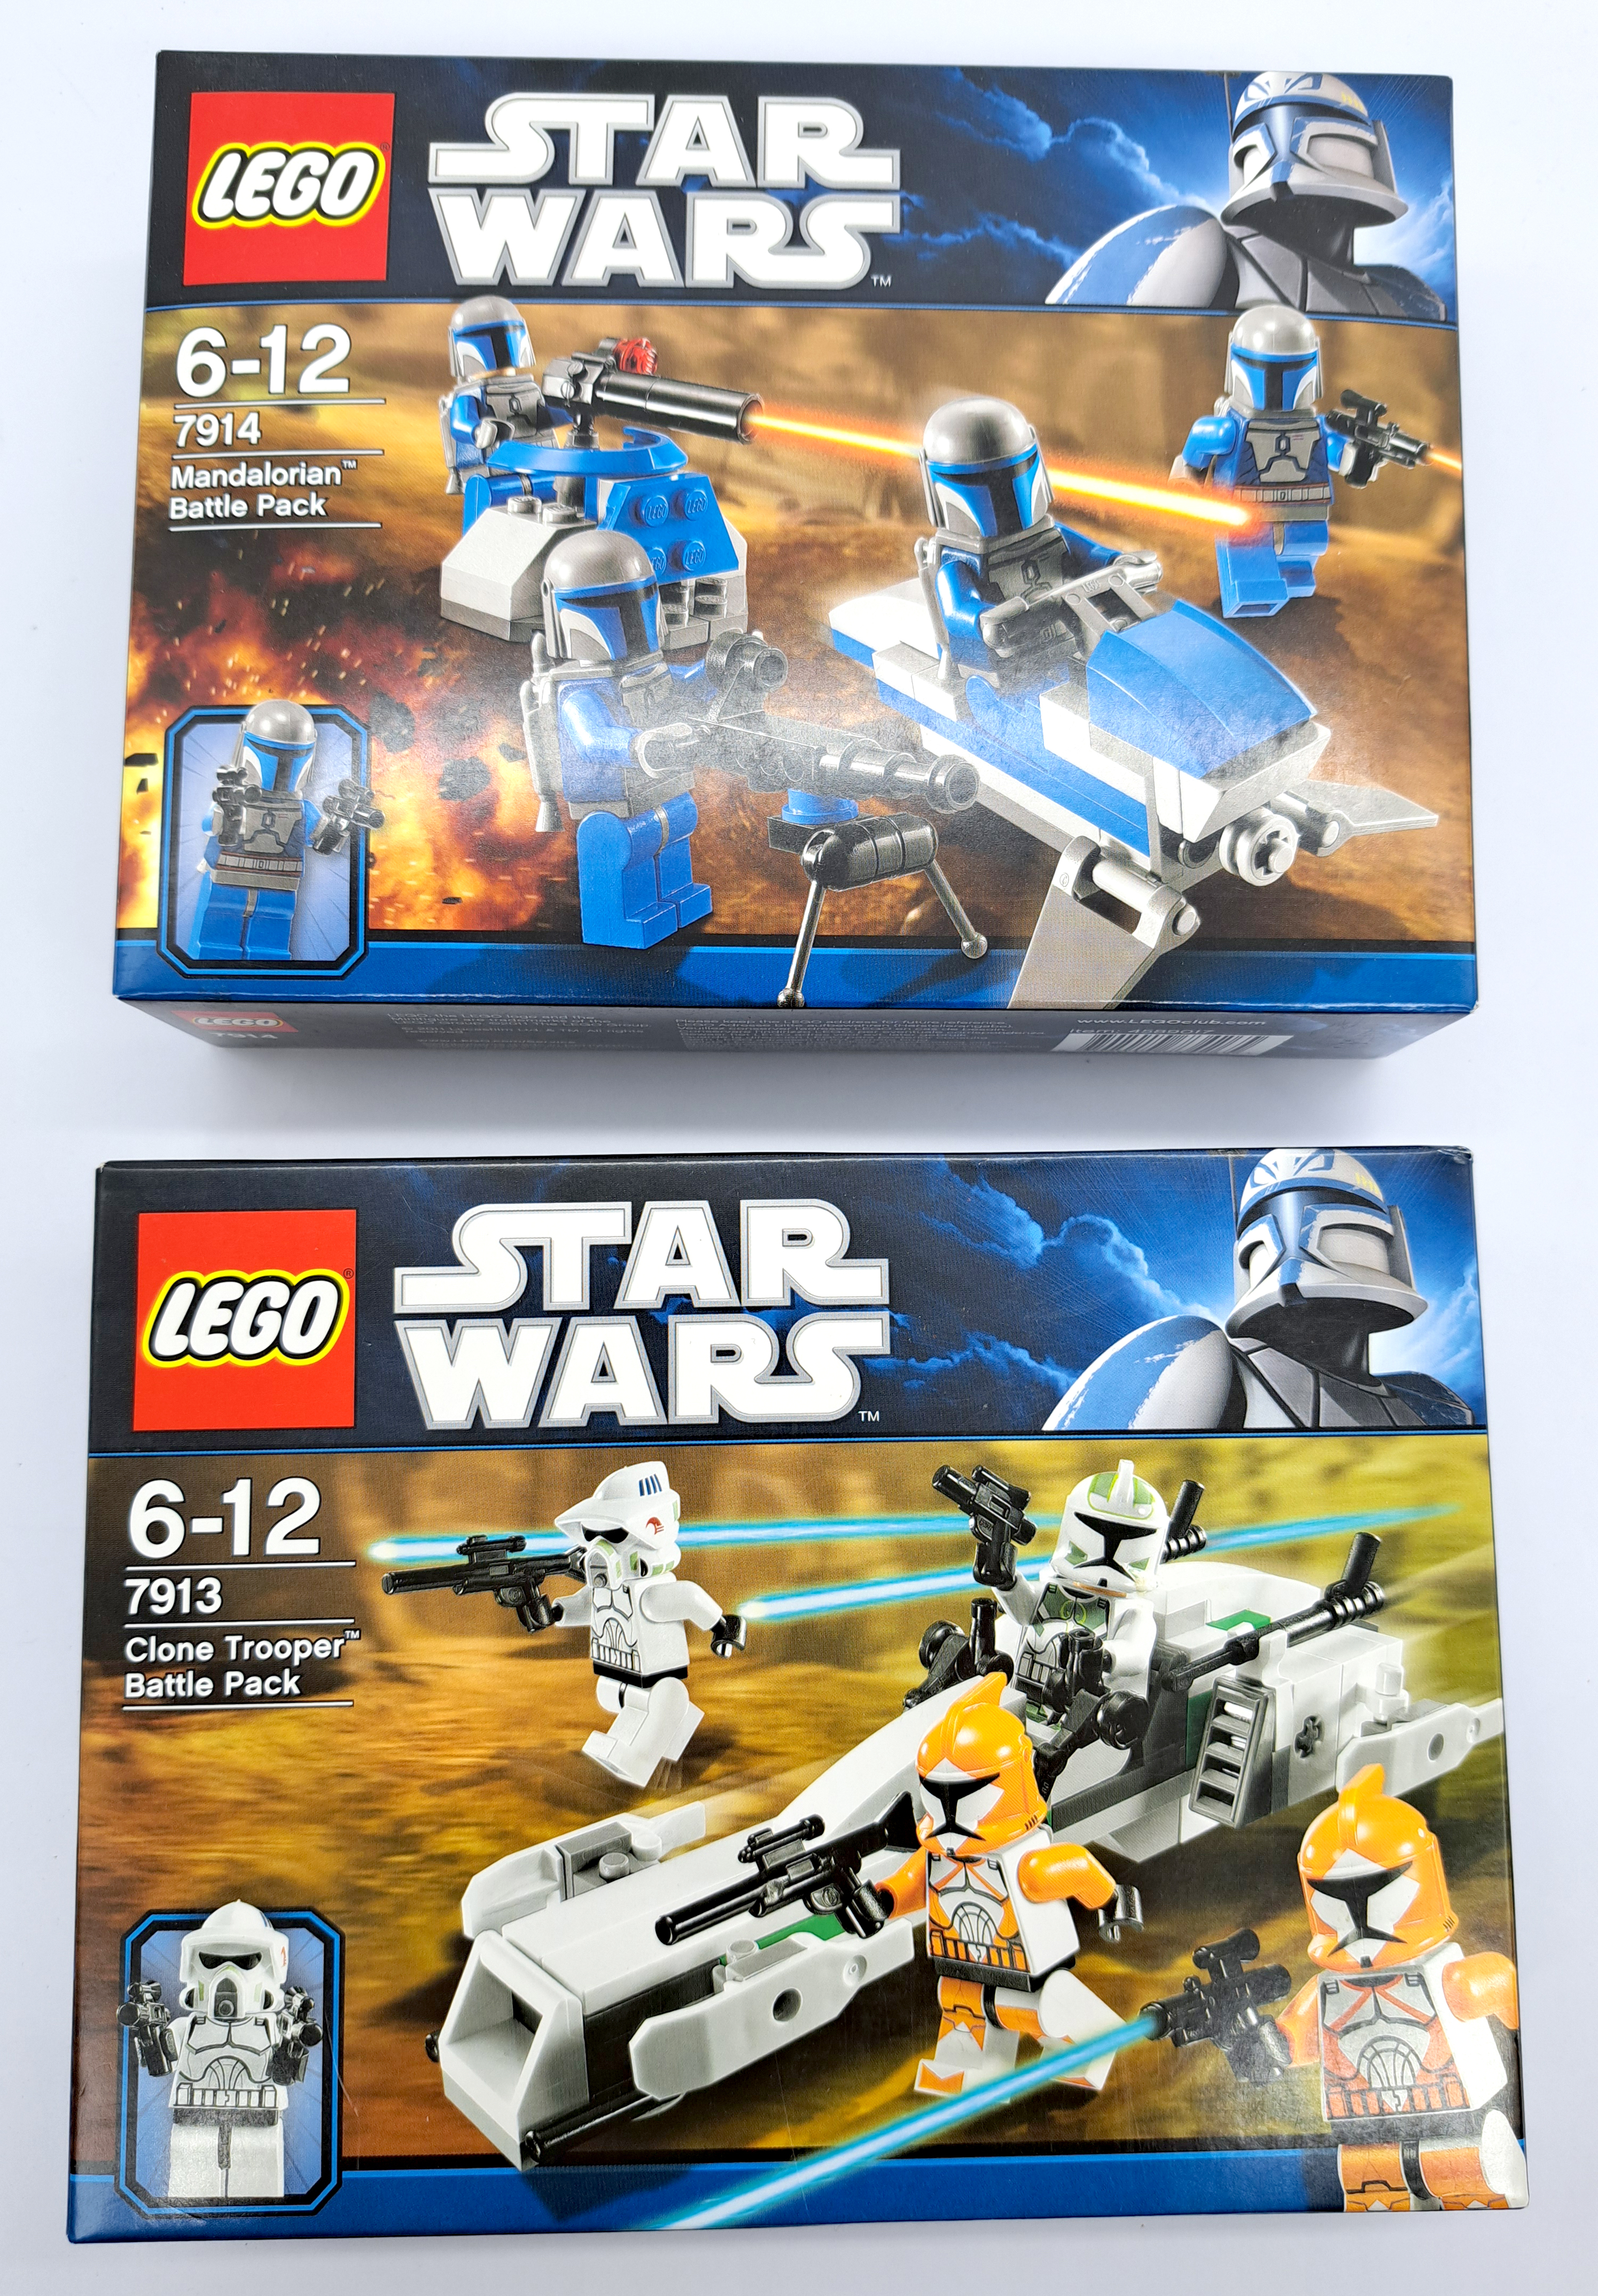 Lego Star Wars 7913 Clone Trooper Battle Pack & 7914 Mandalorian Battle Pack. Near mint to mint 